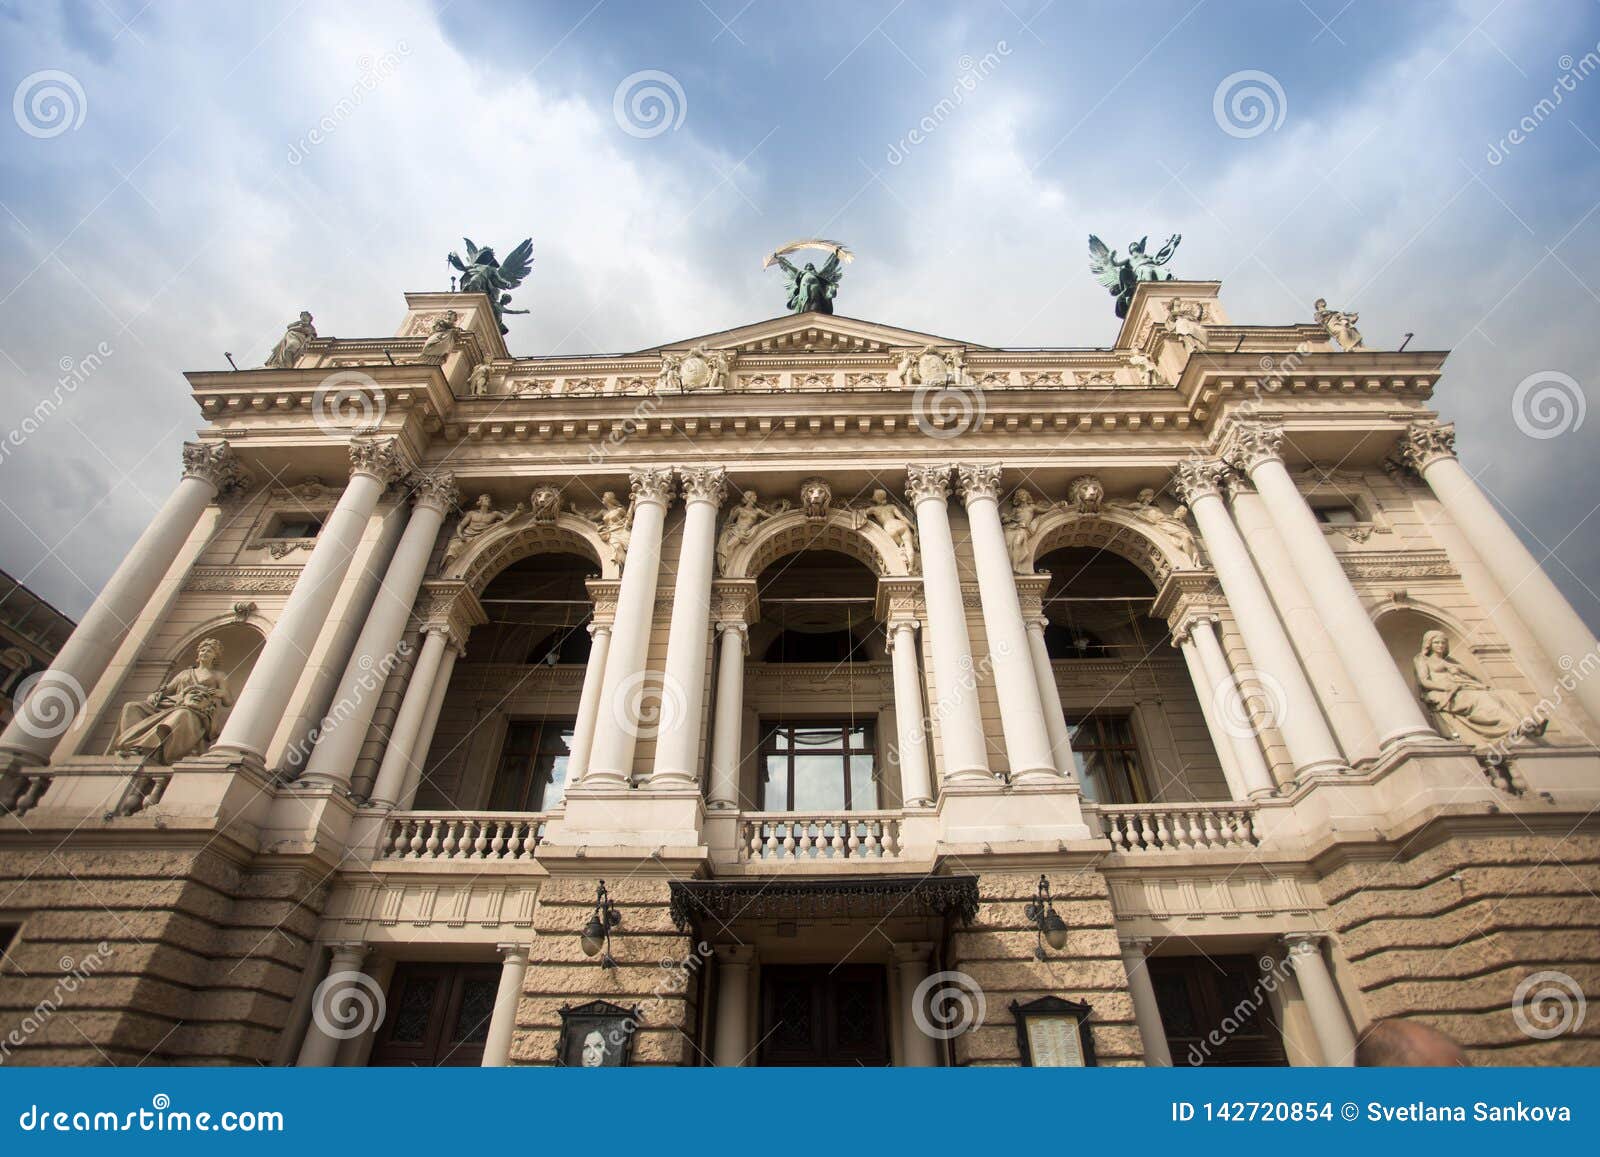 lviv opera house, academic opera and ballet theatre in lviv, ukraine